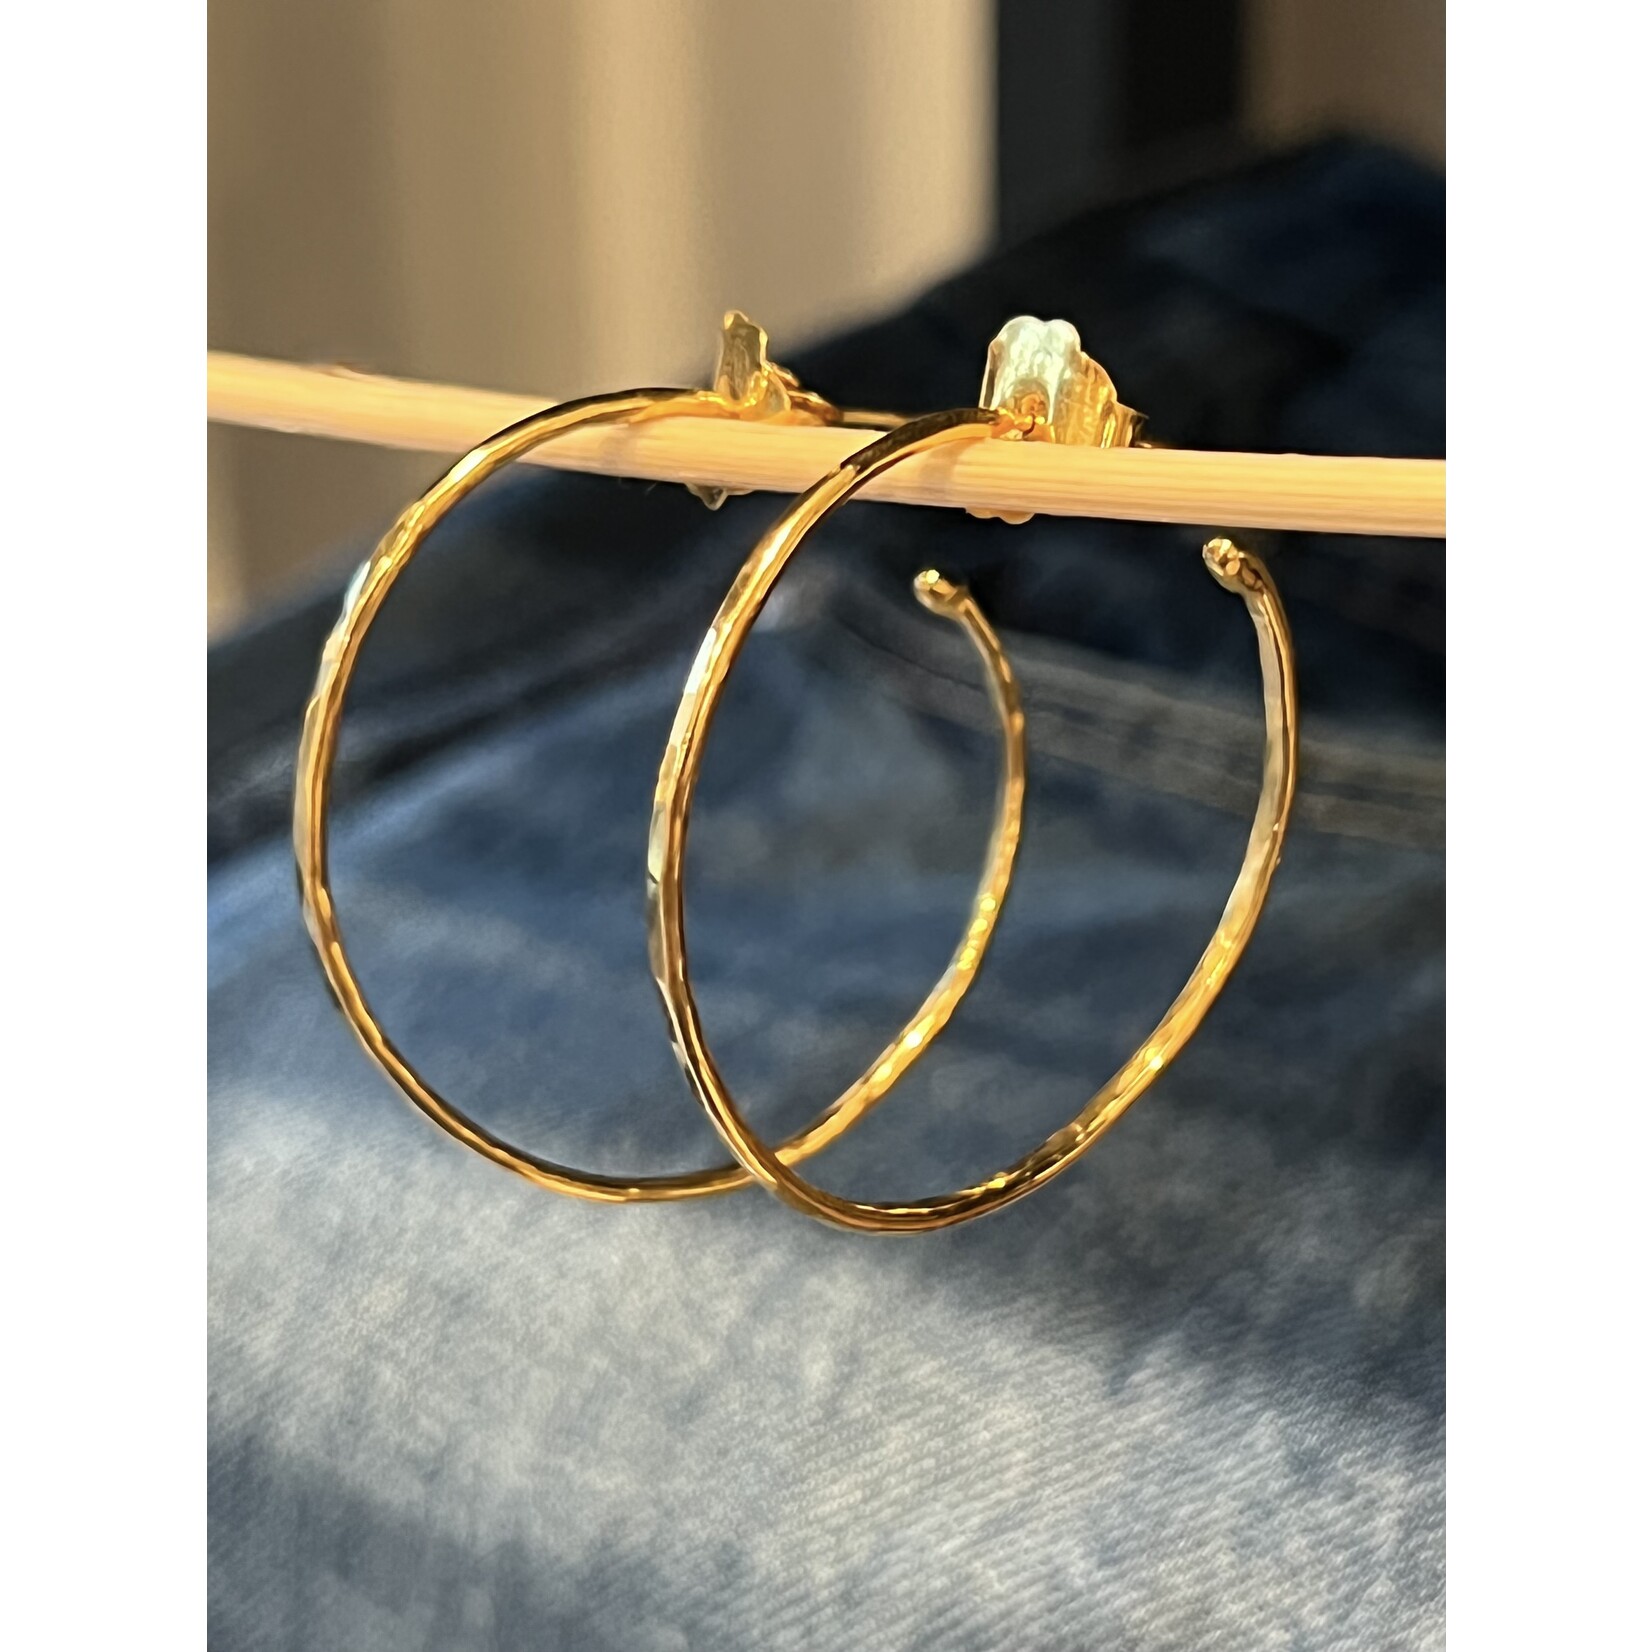 DeNev Medium 18kt Polished Yellow Gold Vermeil Soft Hammer Hoop Earrings